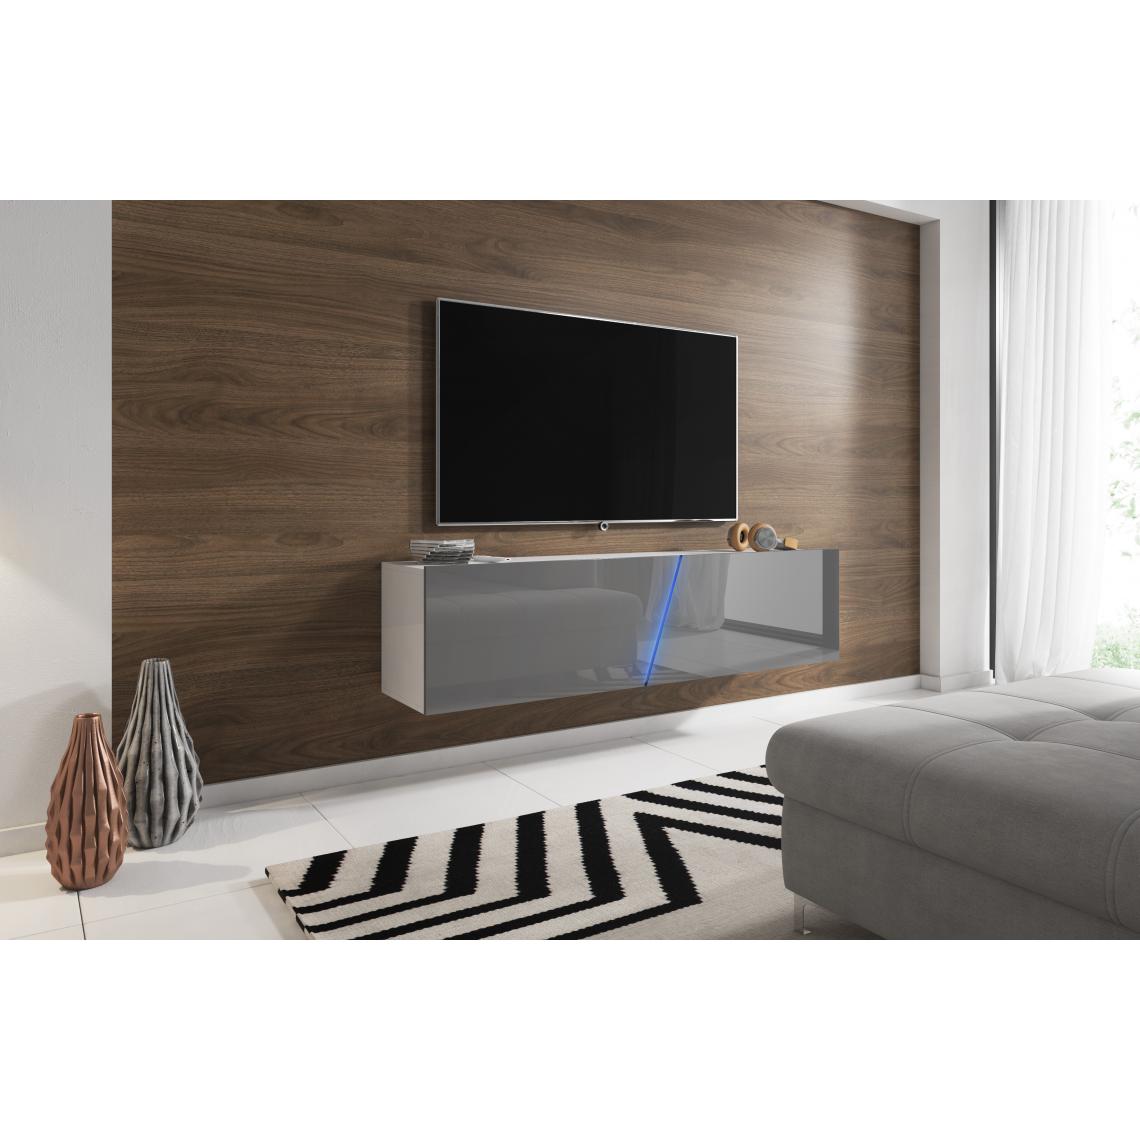 3xeliving - Meuble TV suspendu moderne et tendance Aczi czary / noir brillant 160cm LED - Meubles TV, Hi-Fi